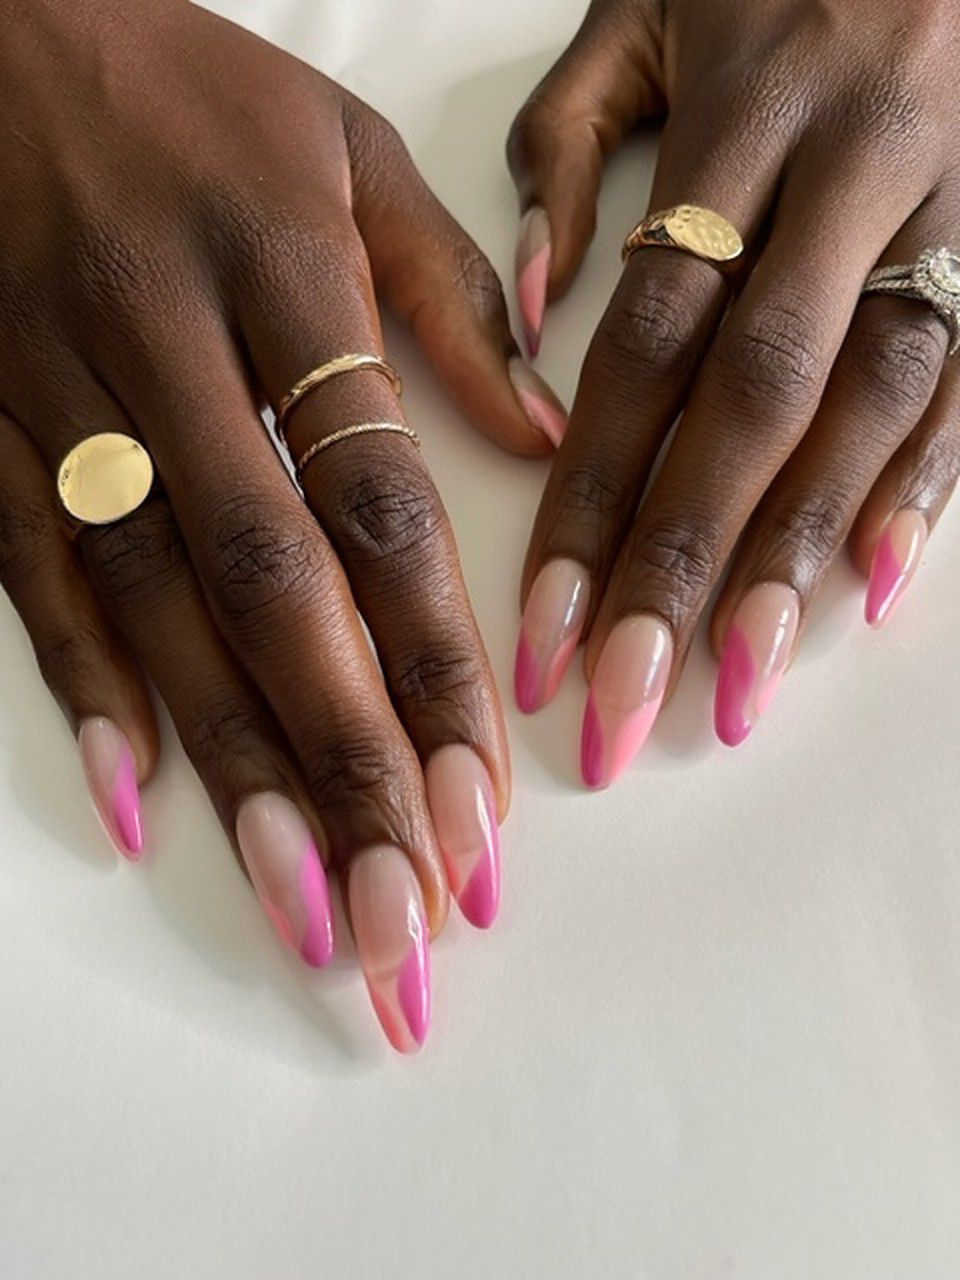 Issa Ray com manicure rosa